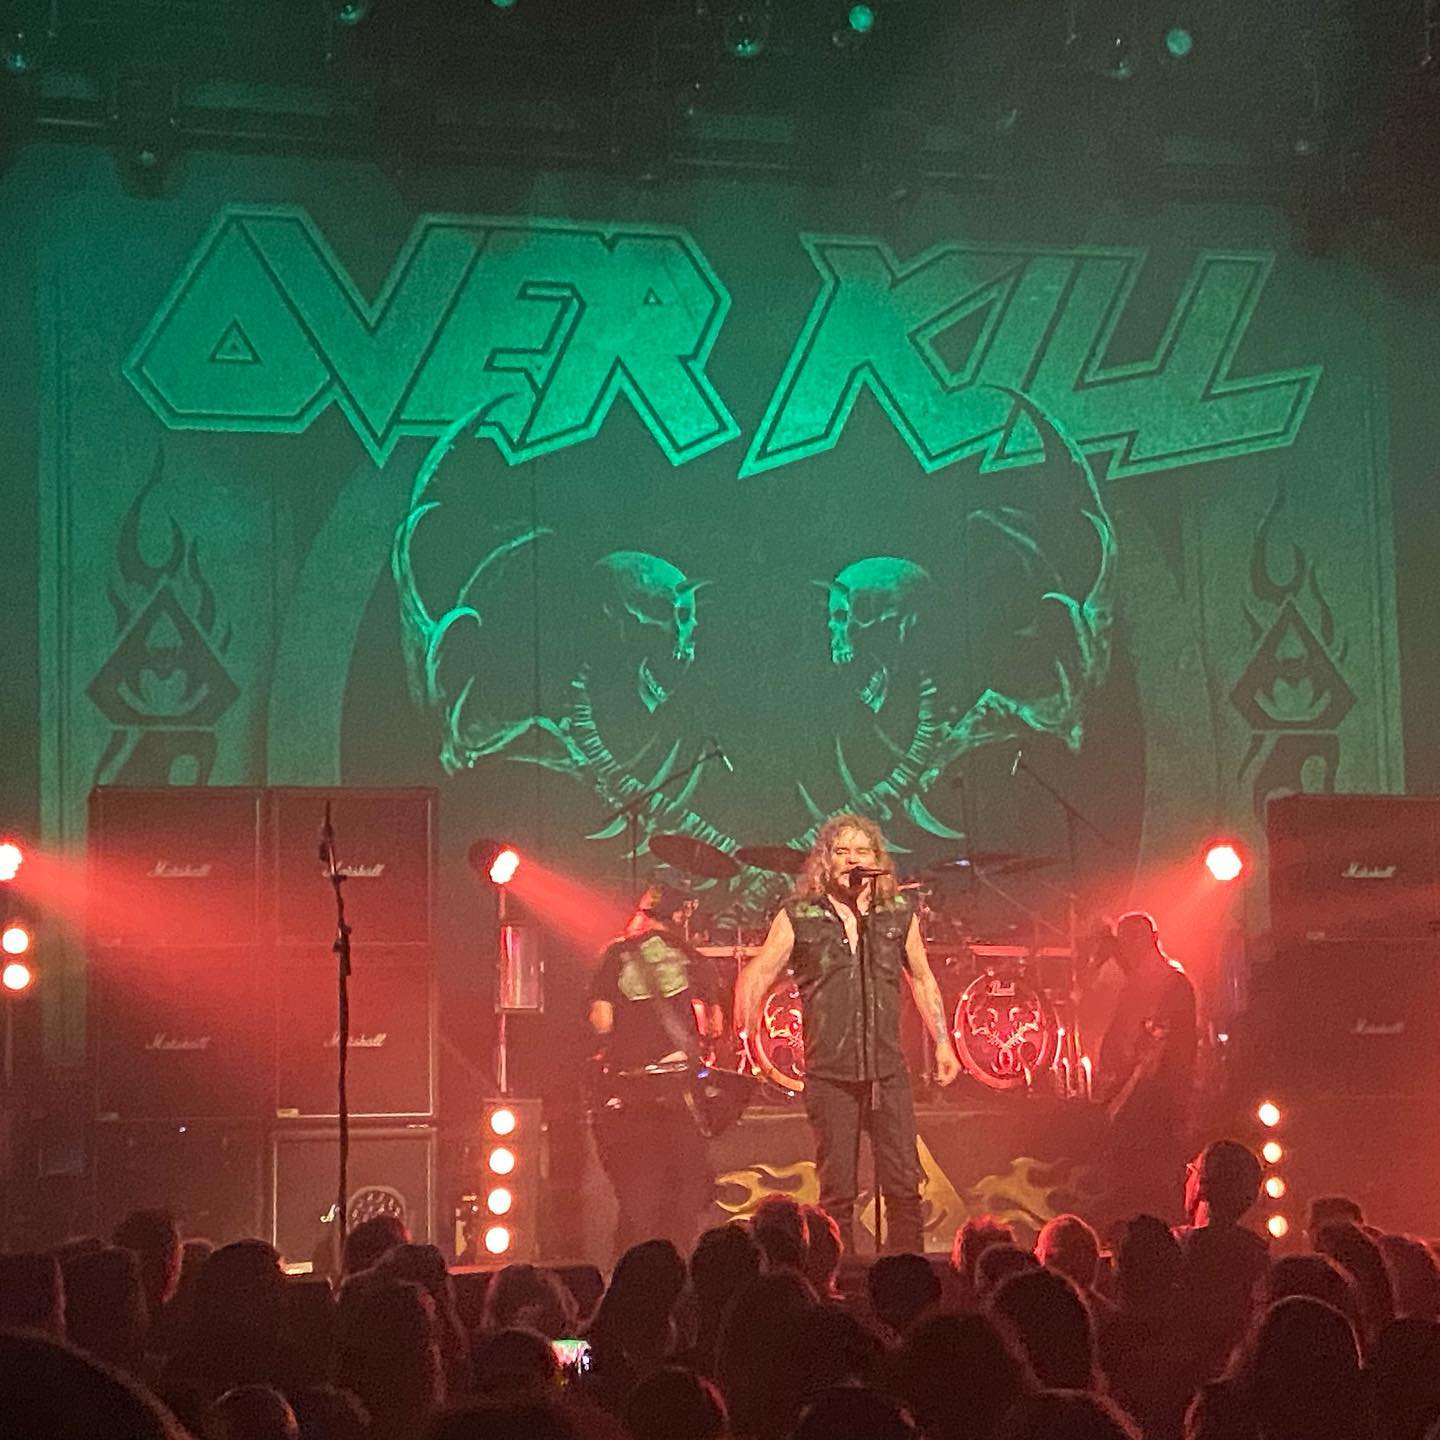 Overkill - Hedon Zwolle, NL @overkillofficial @hedonzwolle #gigpic #thrash #metal